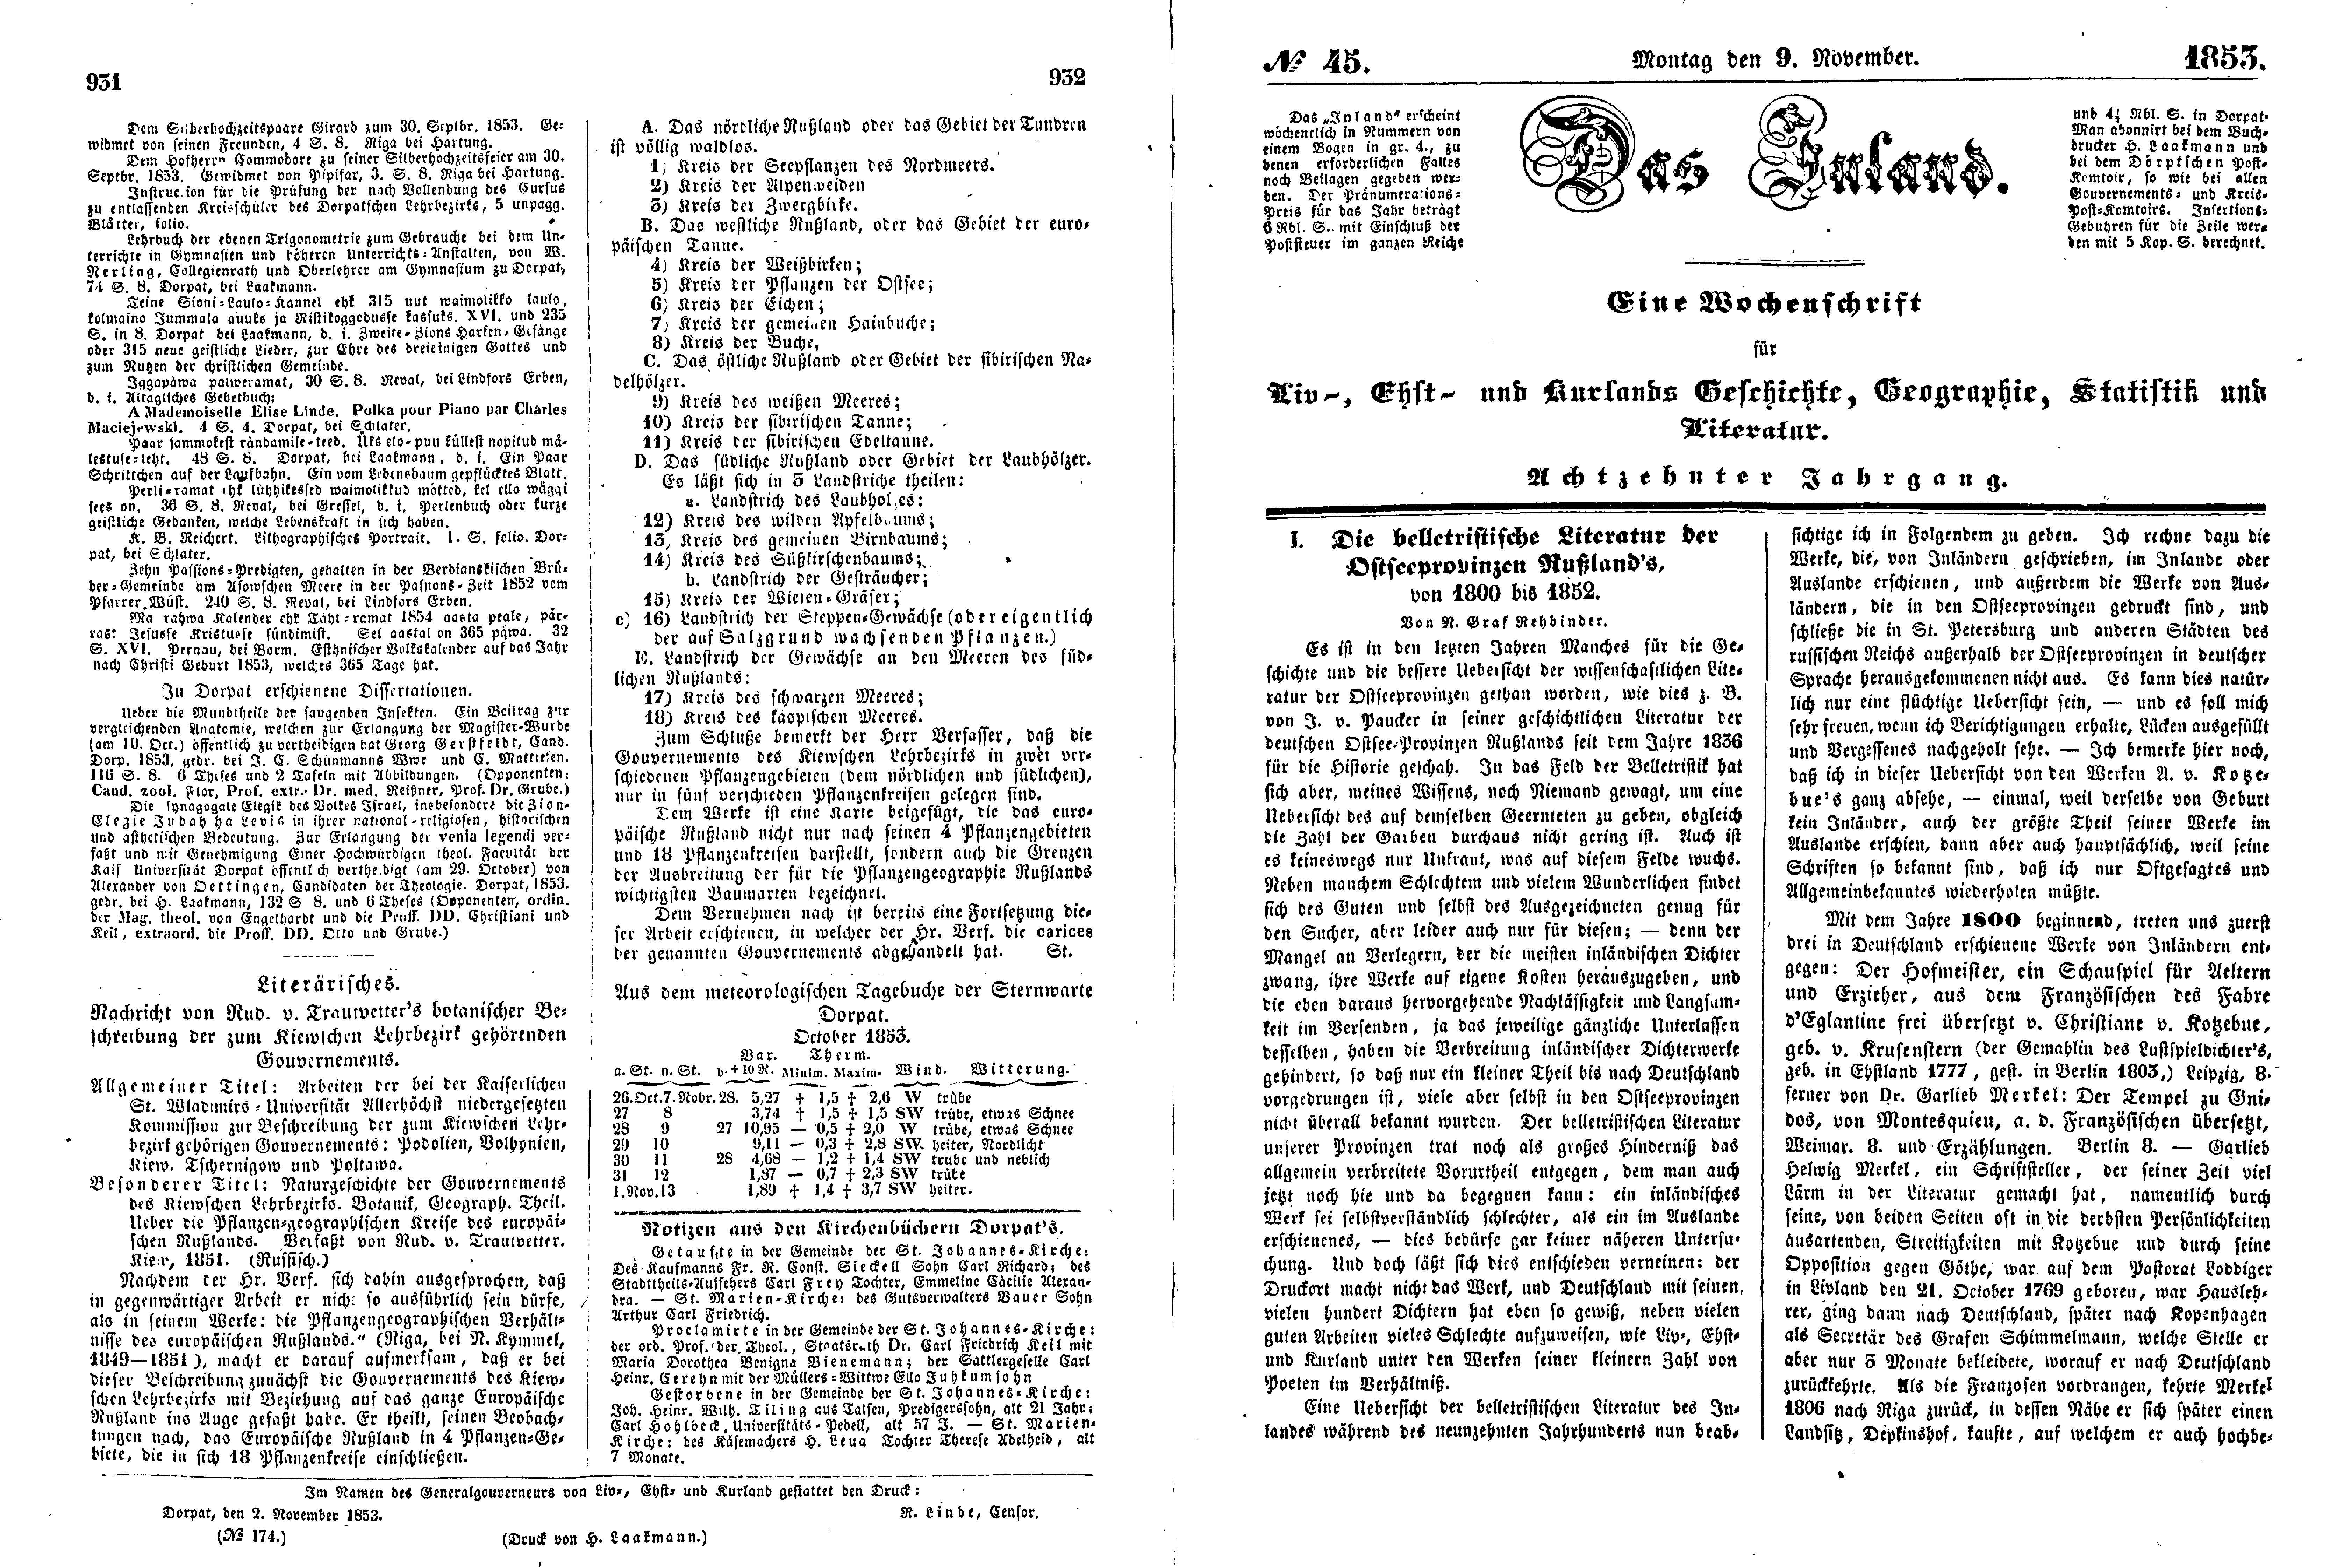 Das Inland [18] (1853) | 243. (931-934) Main body of text